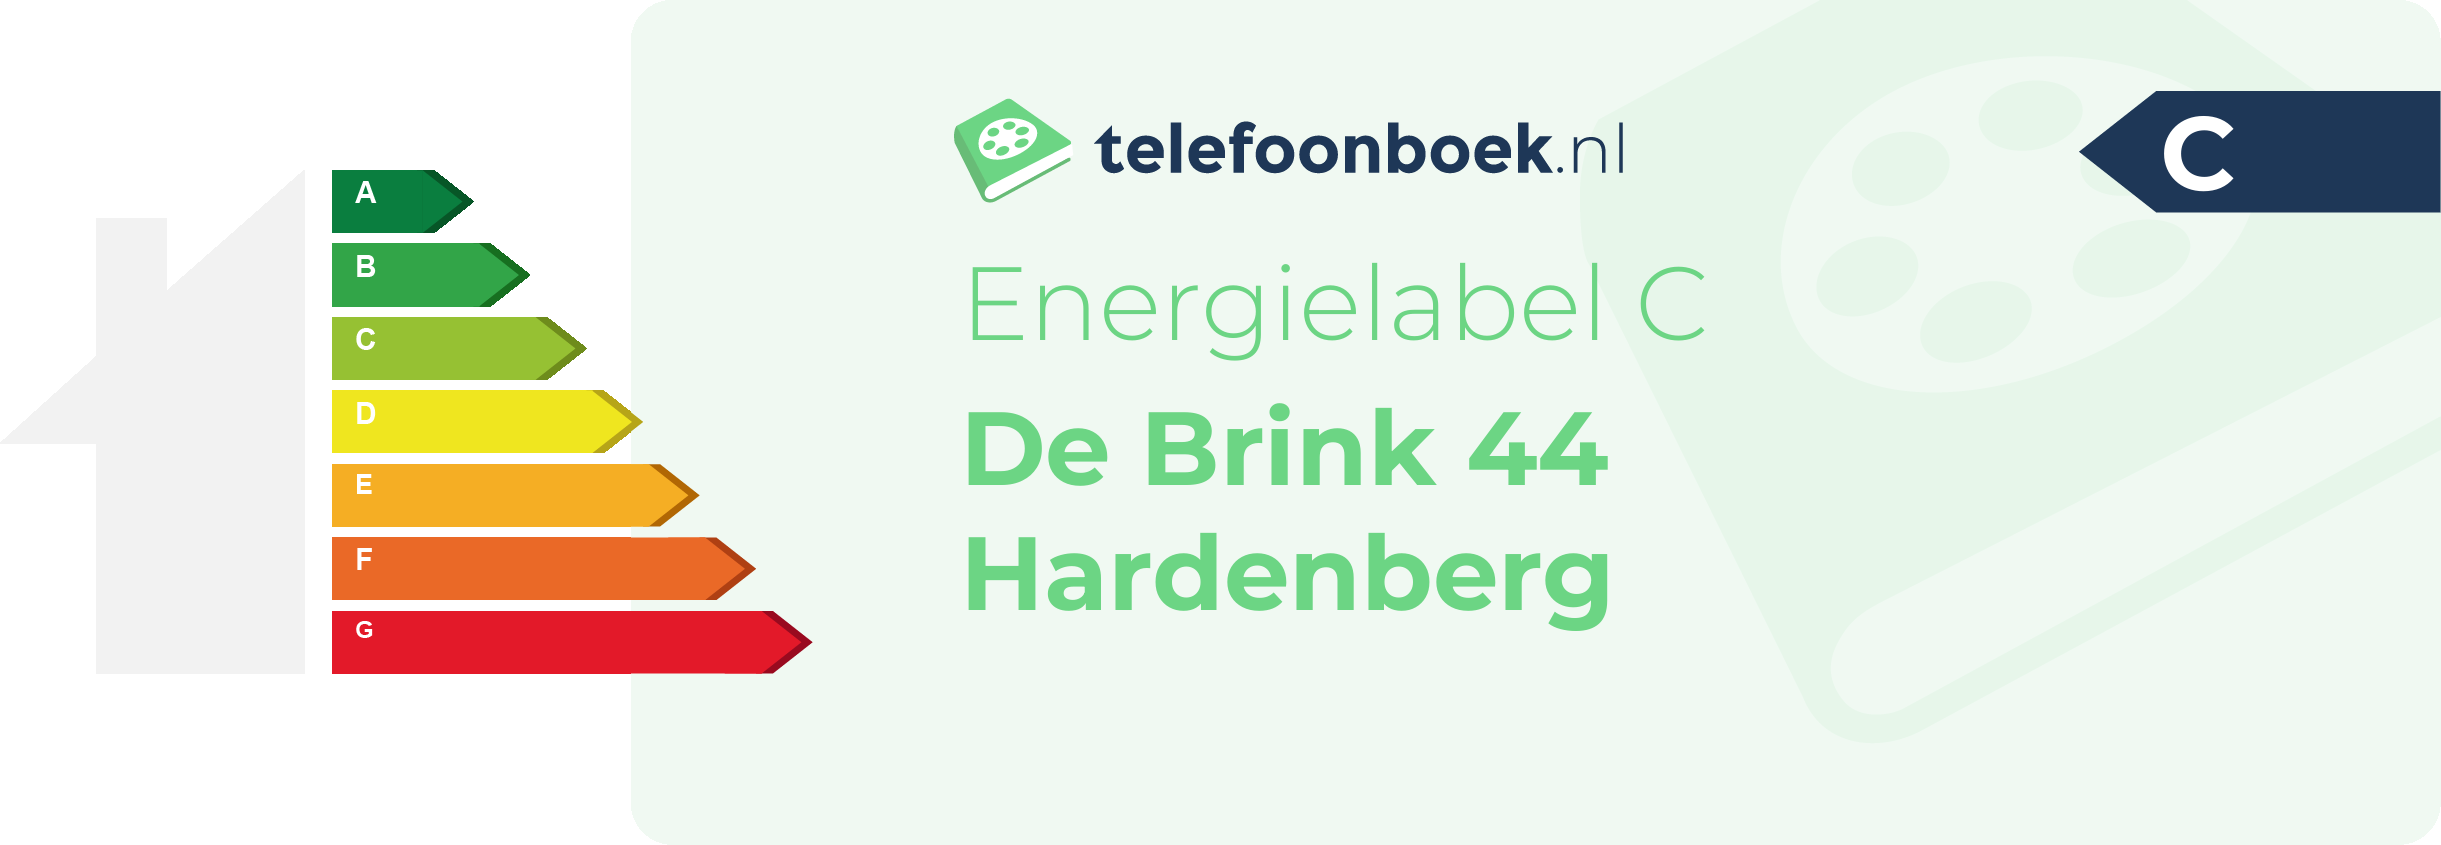 Energielabel De Brink 44 Hardenberg